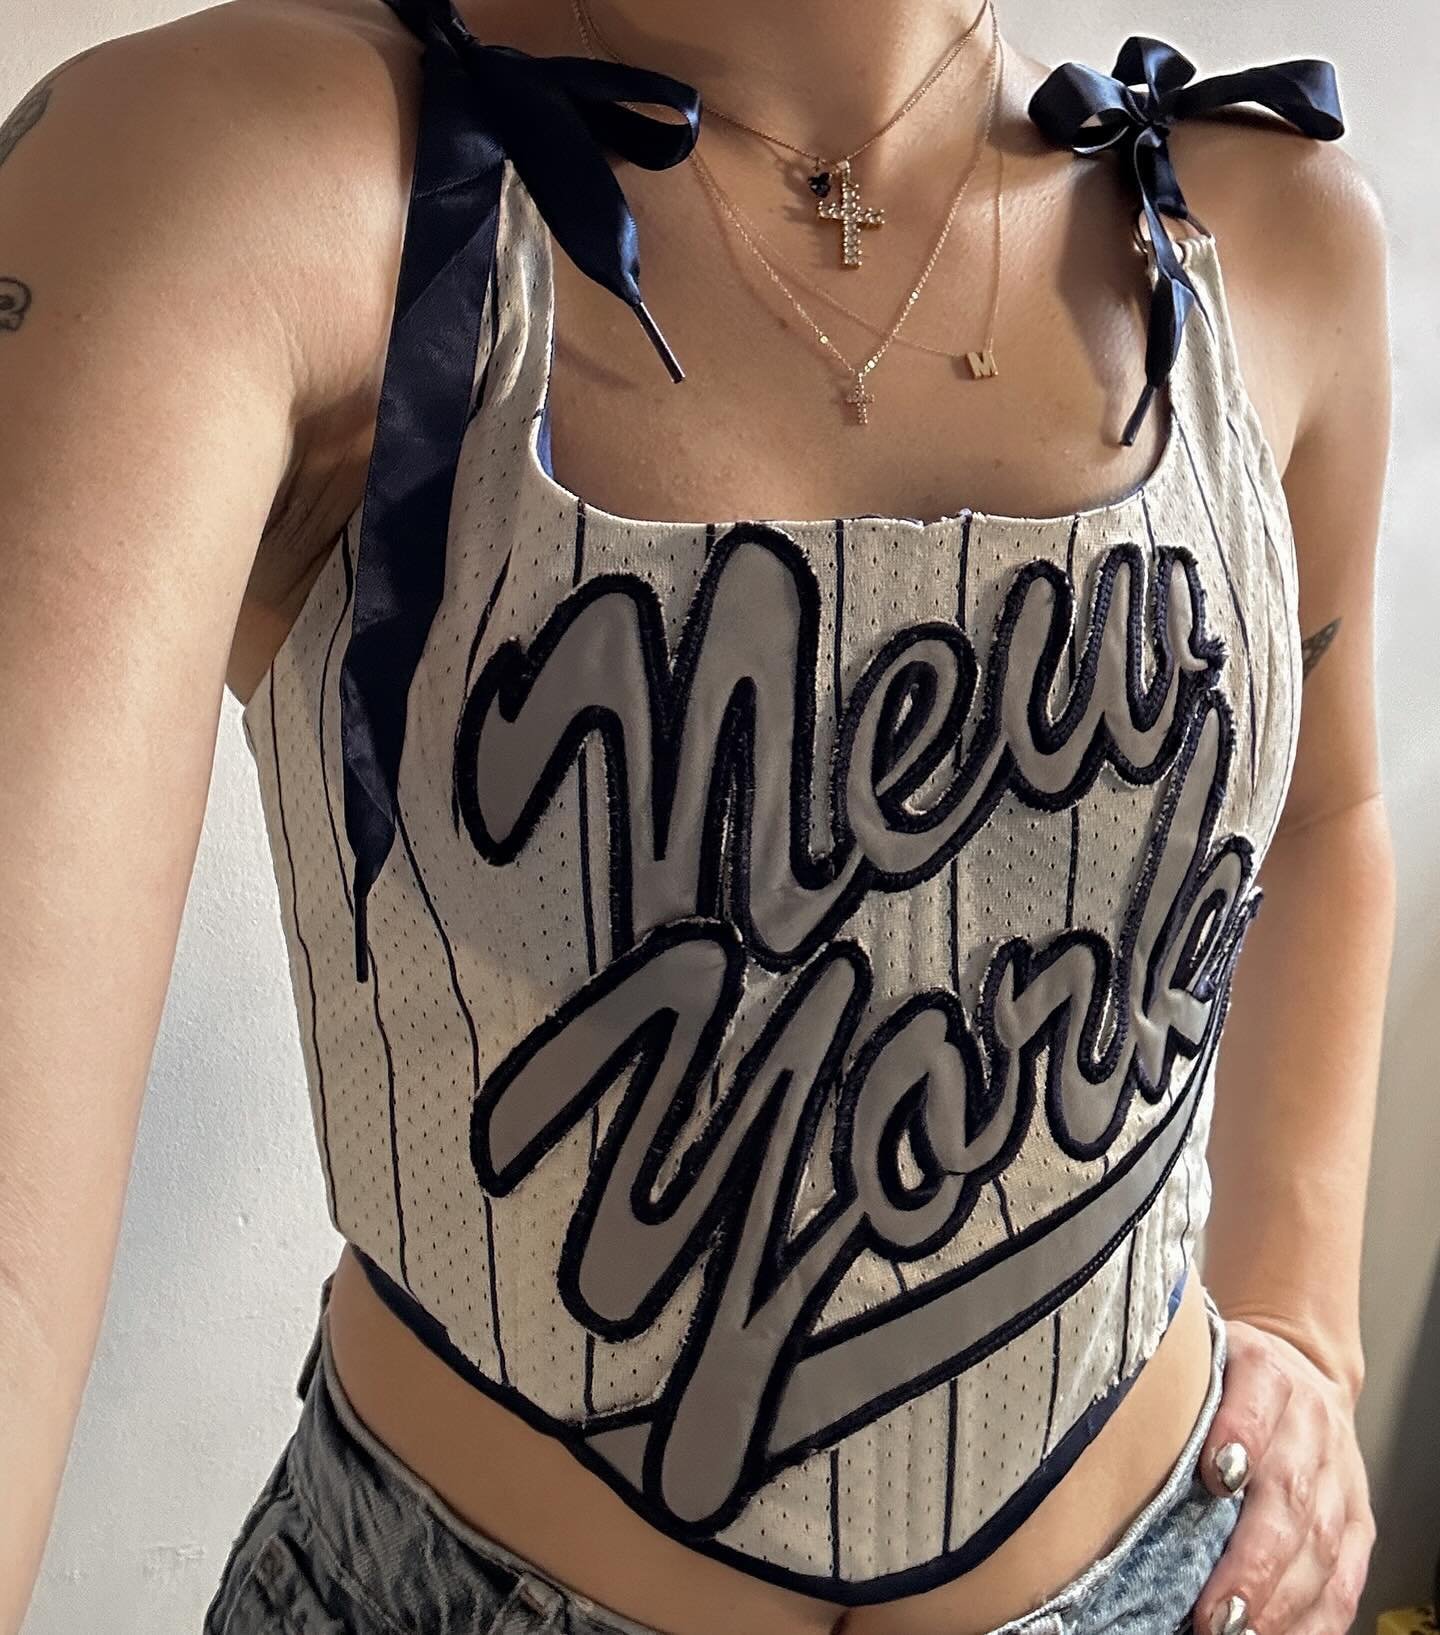 Custom order for a Yankees fan ready for the season ⚾️🗽